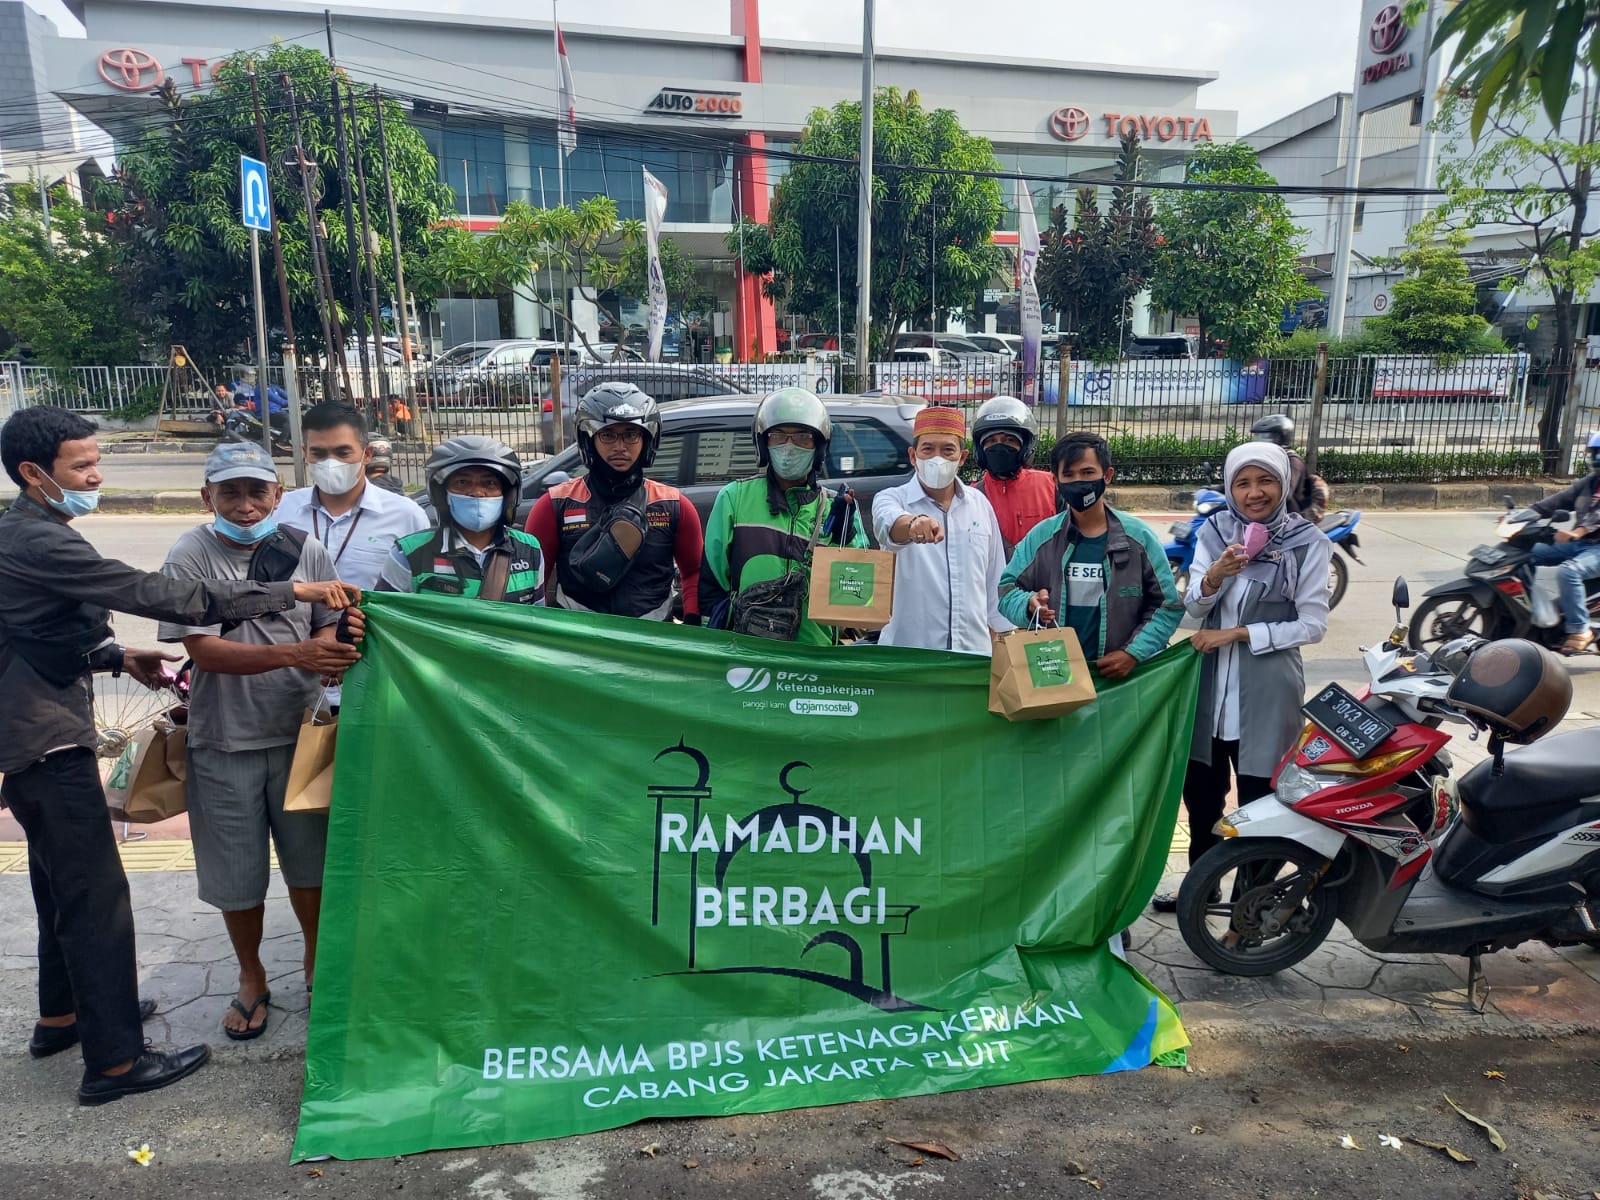 BPJS Ketenagakerjaan Jakarta Pluit berbagi Takjil ke Masyarakat 